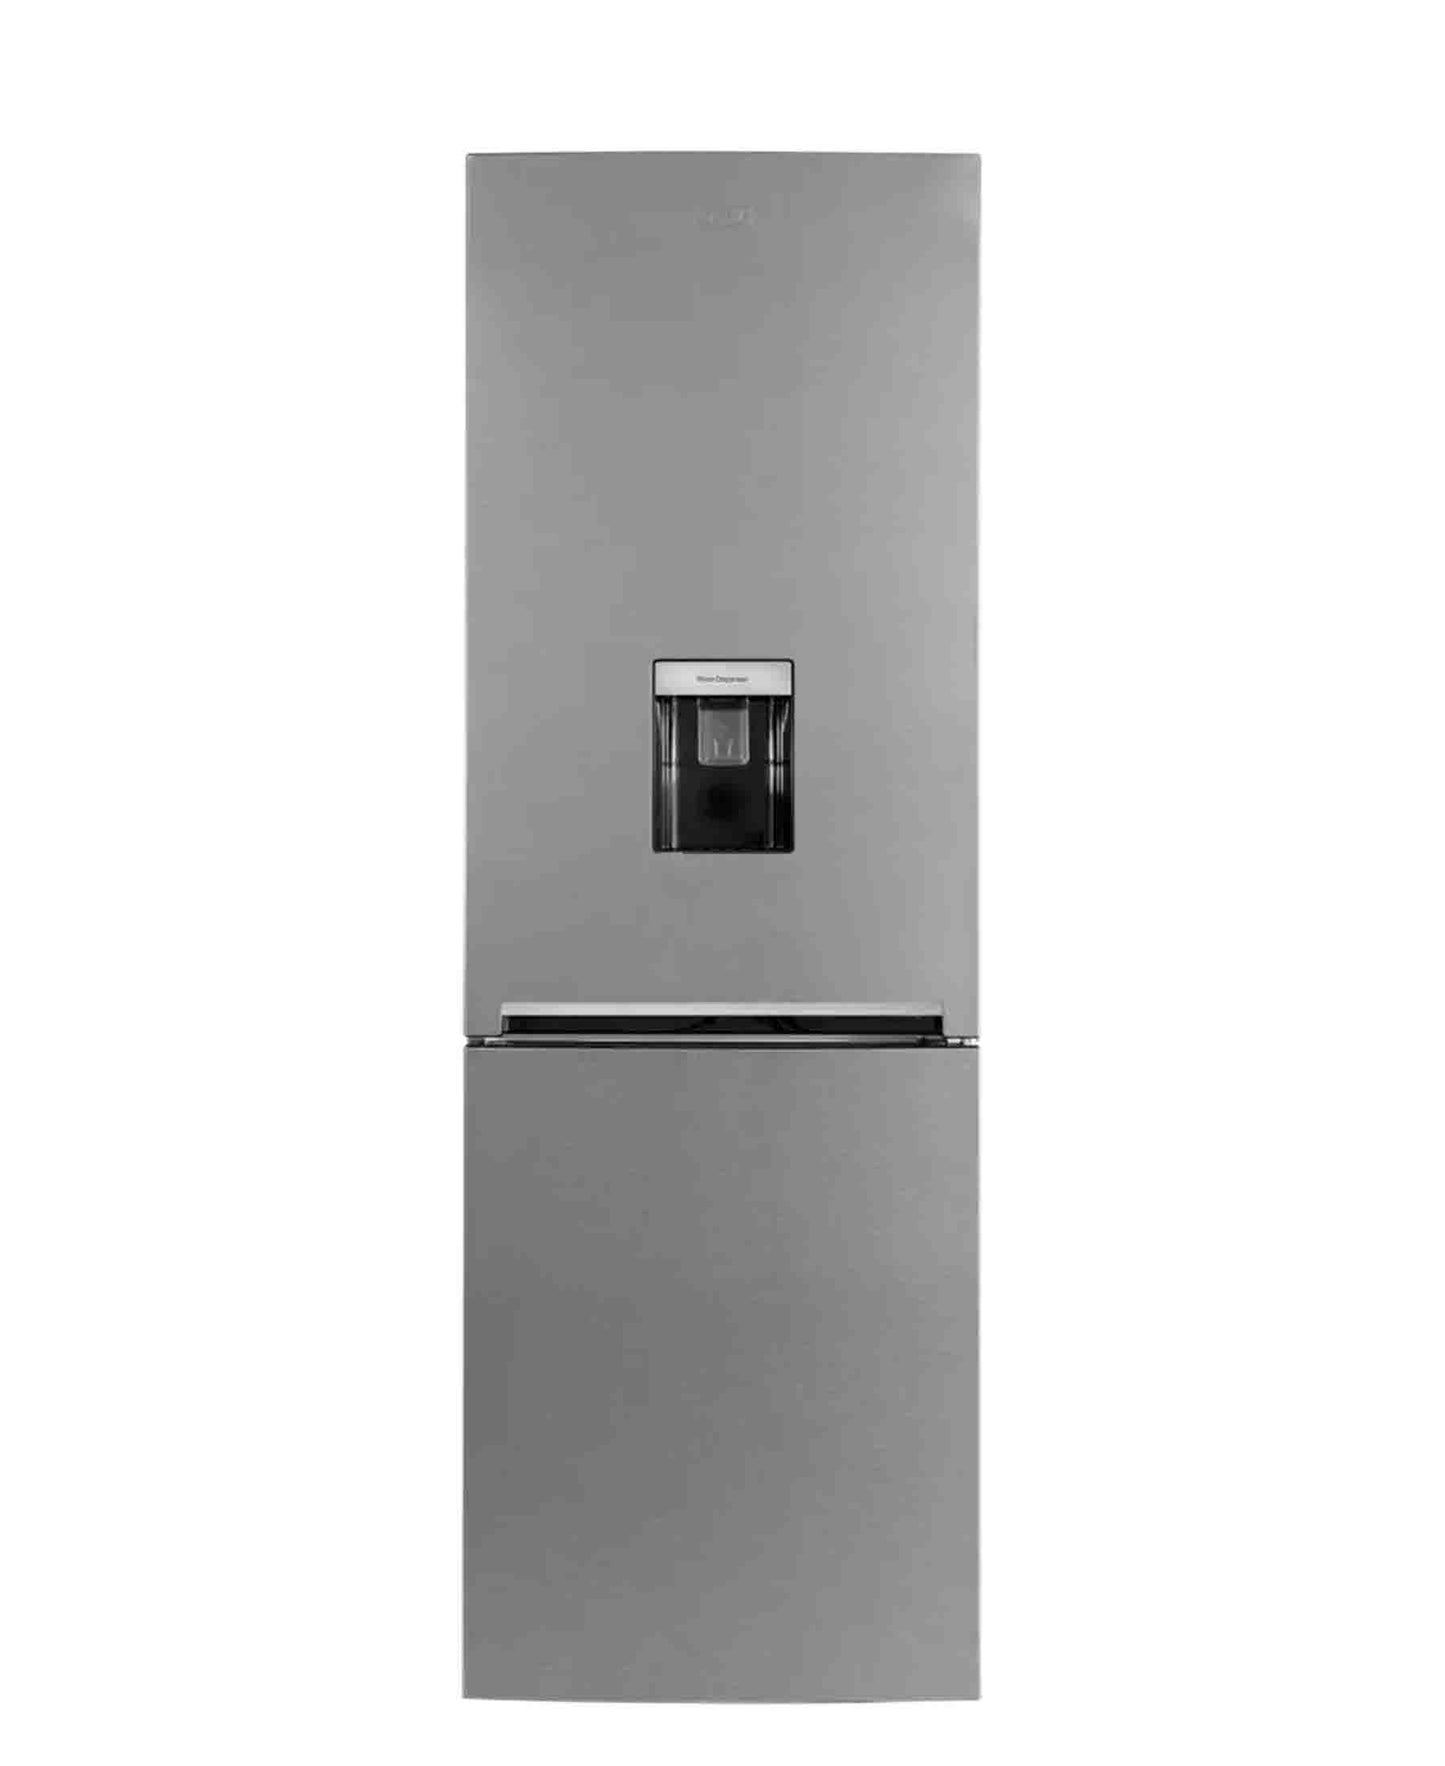 Defy Frost Free Fridge Freezer with Water Dispenser – Metallic